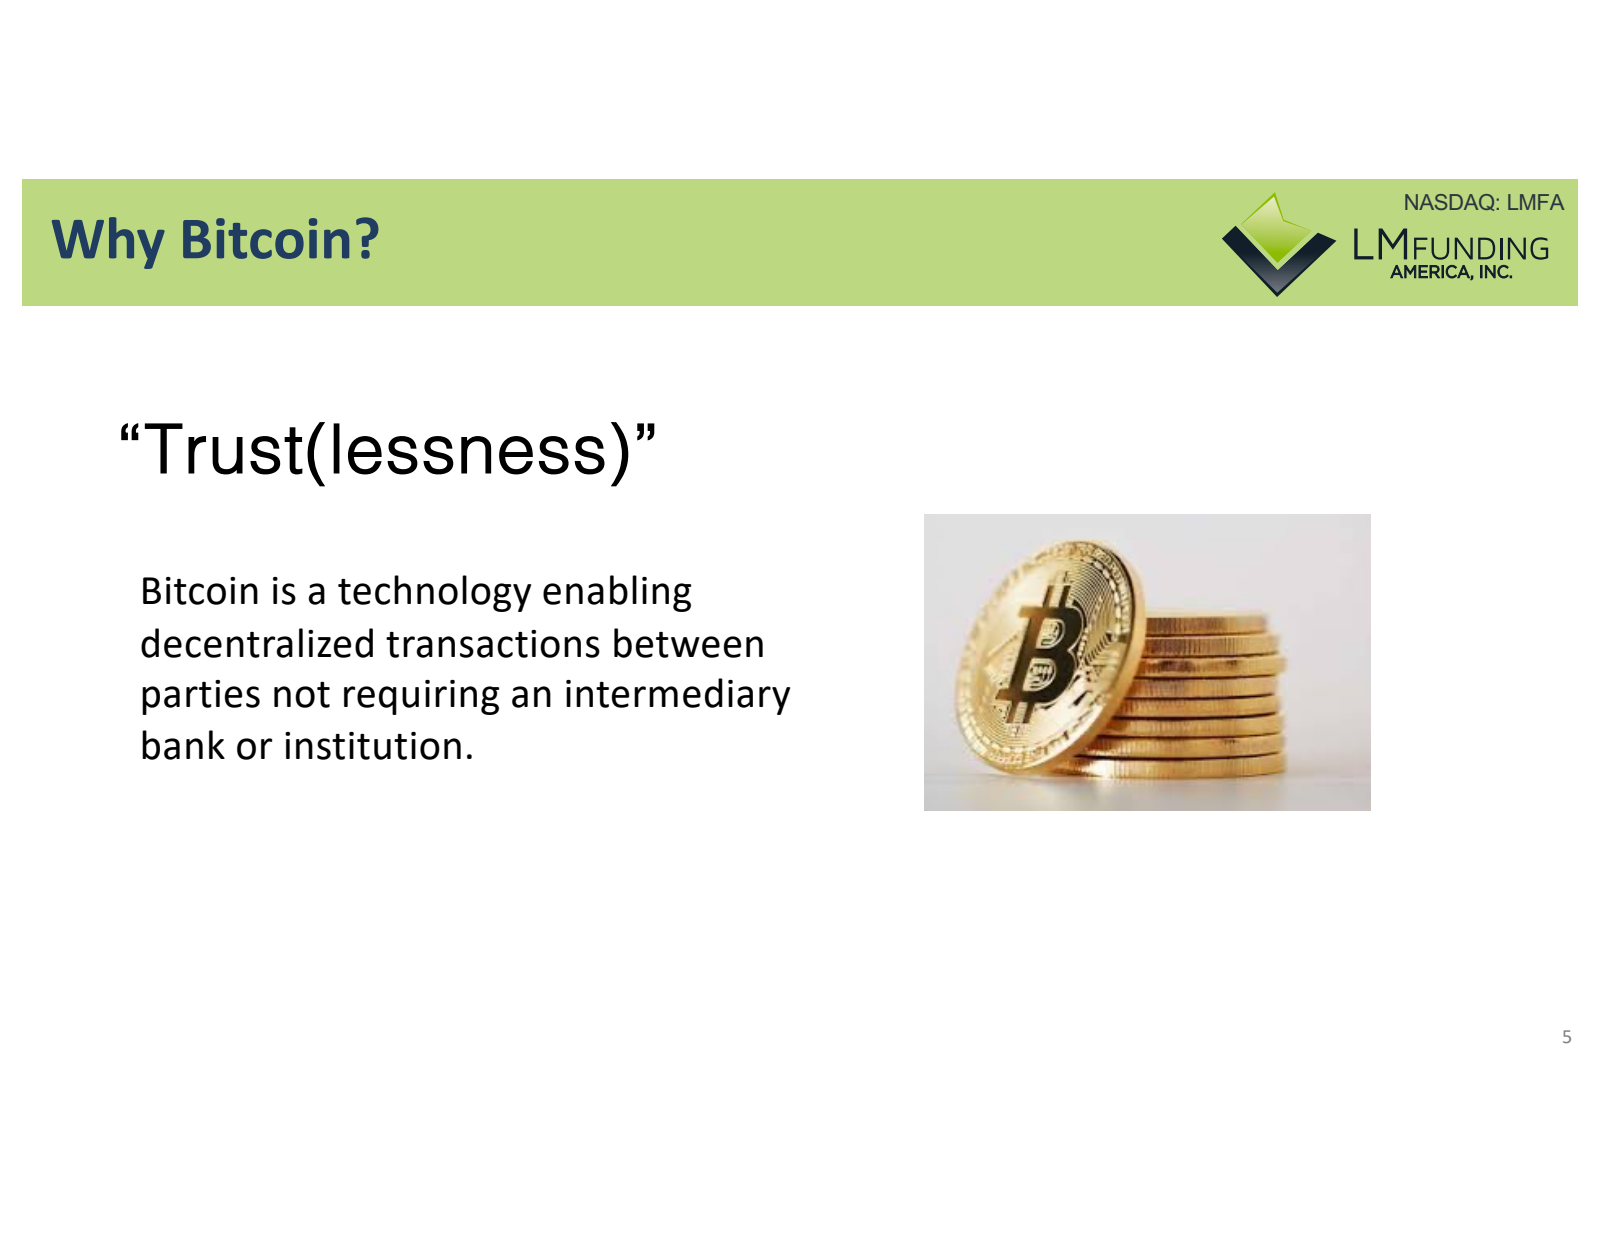 Why Bitcoin ? 

" Tr